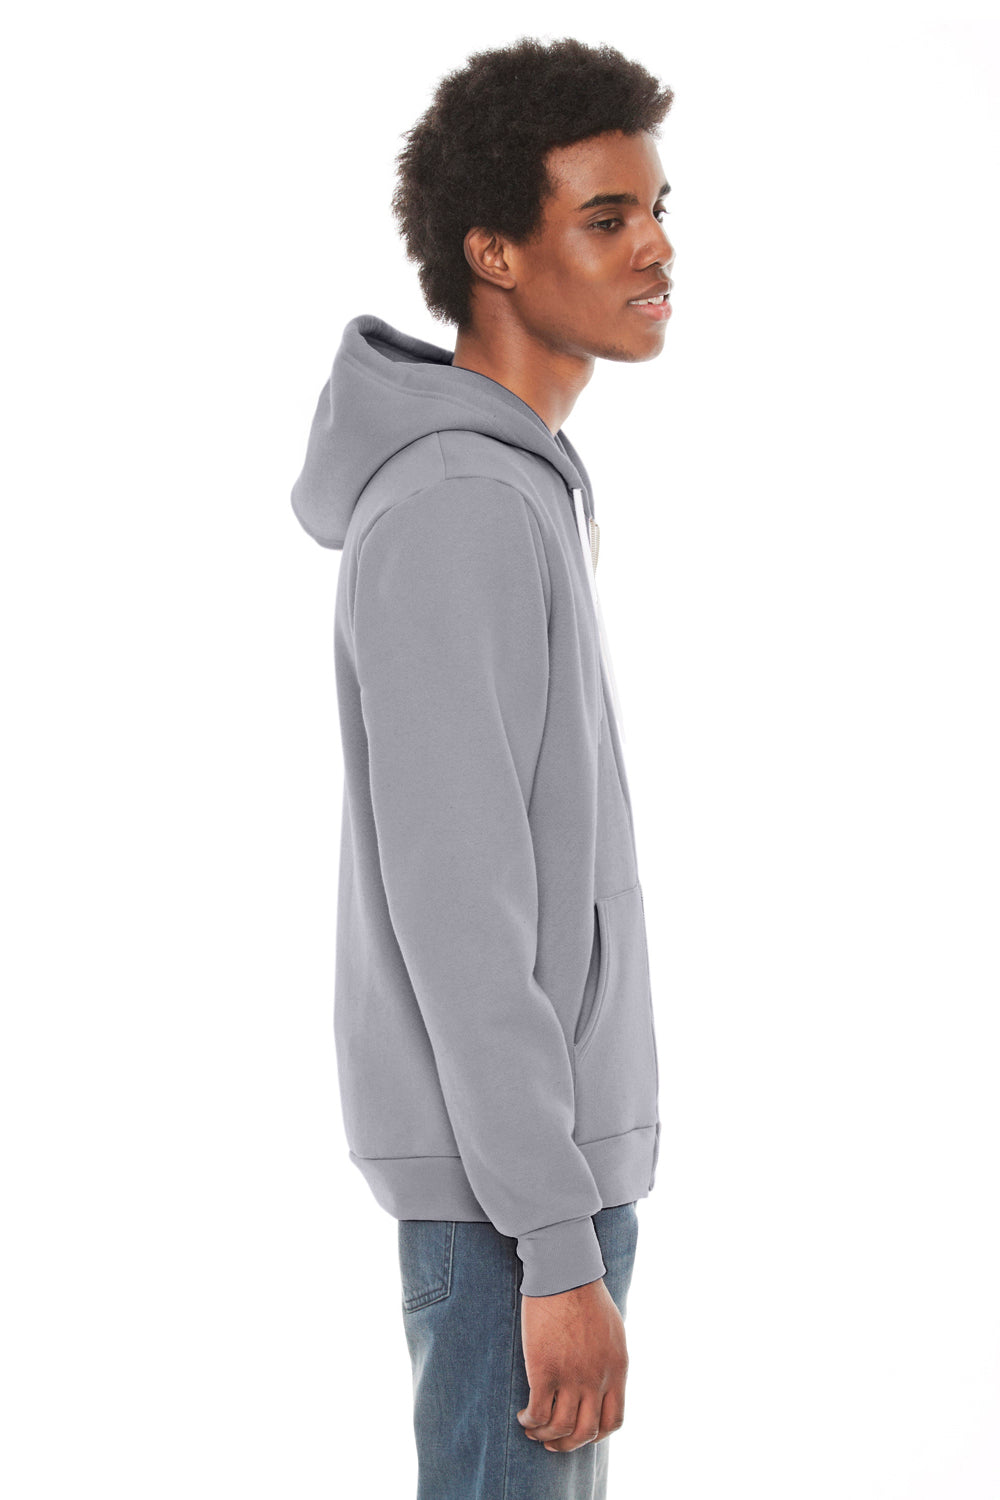 American Apparel F497W Mens Flex Fleece Full Zip Hooded Sweatshirt Hoodie Slate Grey Side